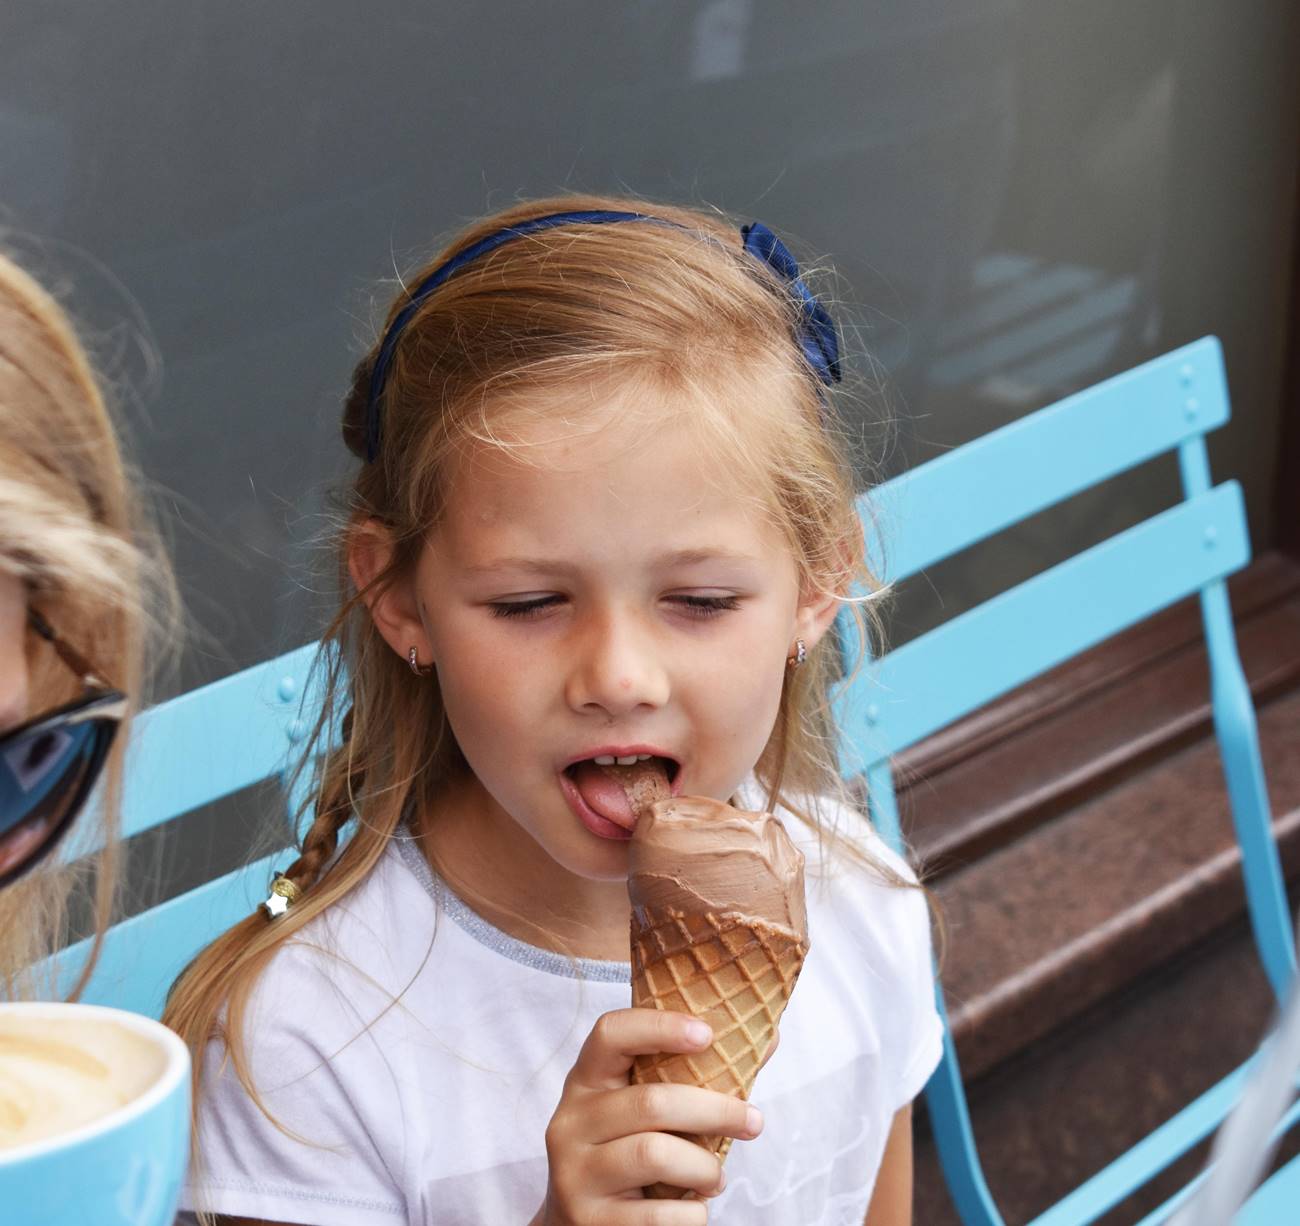 Kakav sladoled je najbolje kupiti deci, a kakav ni pod razno?